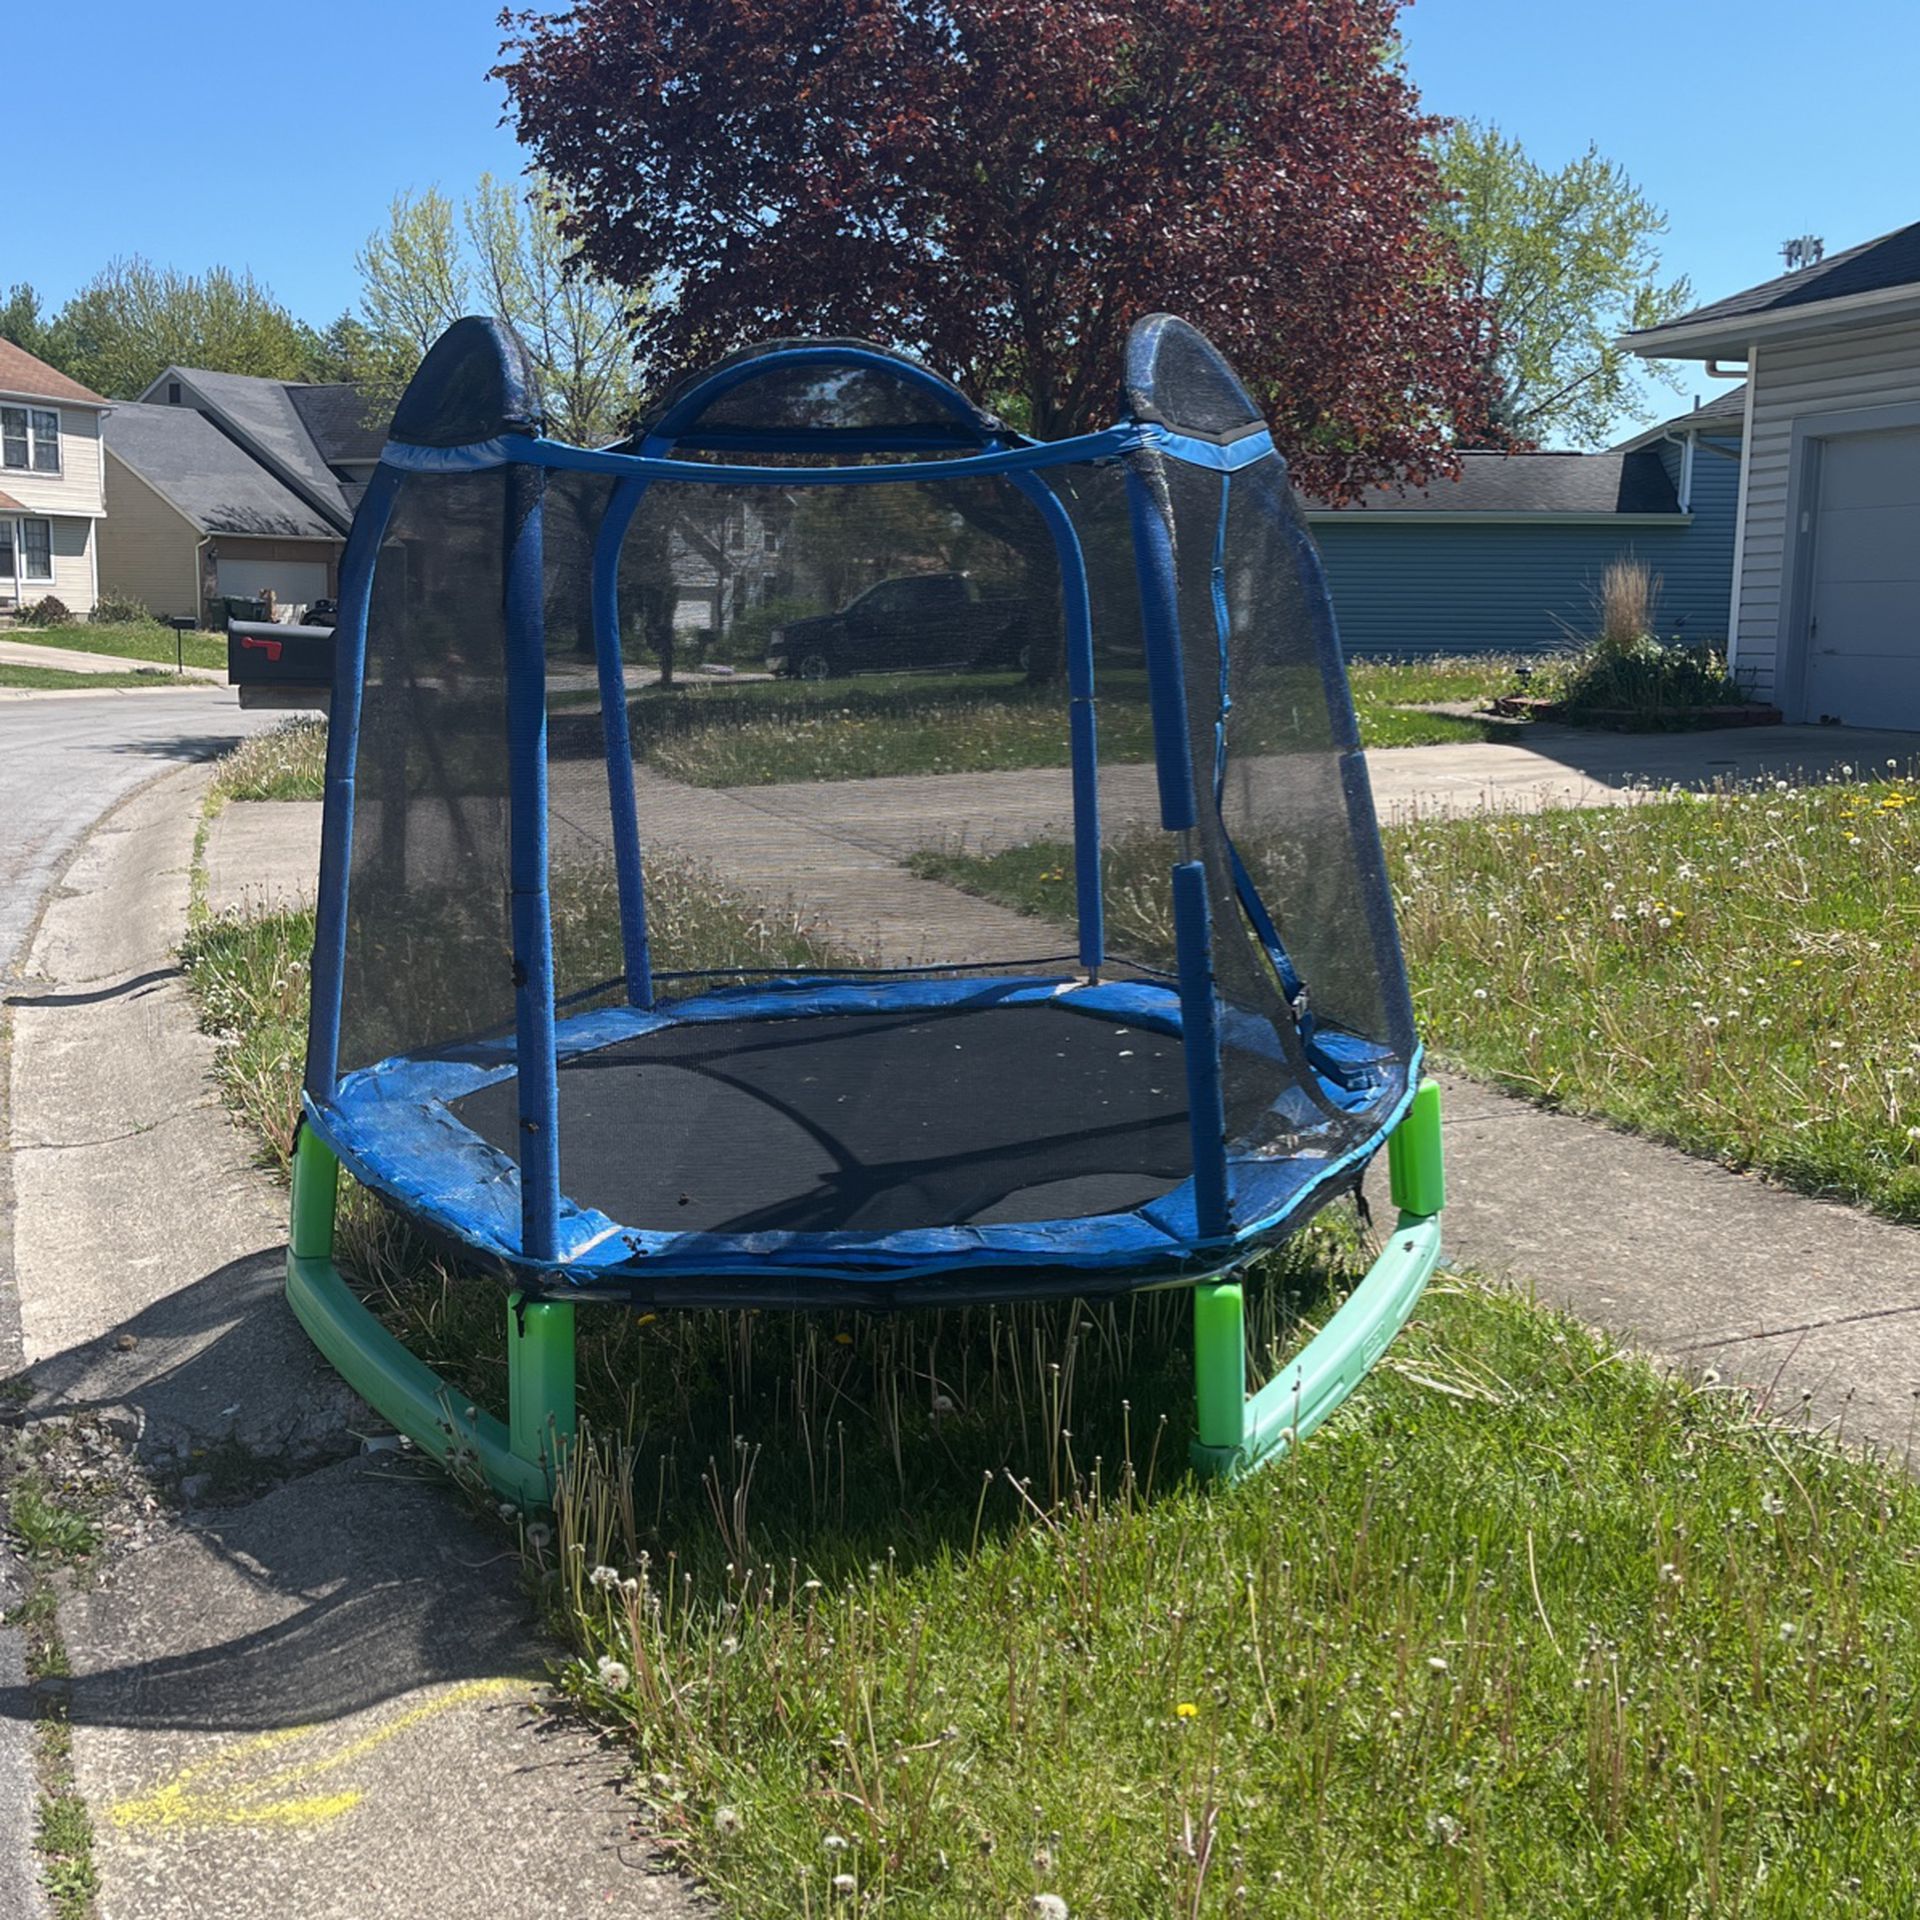 Free kids trampoline